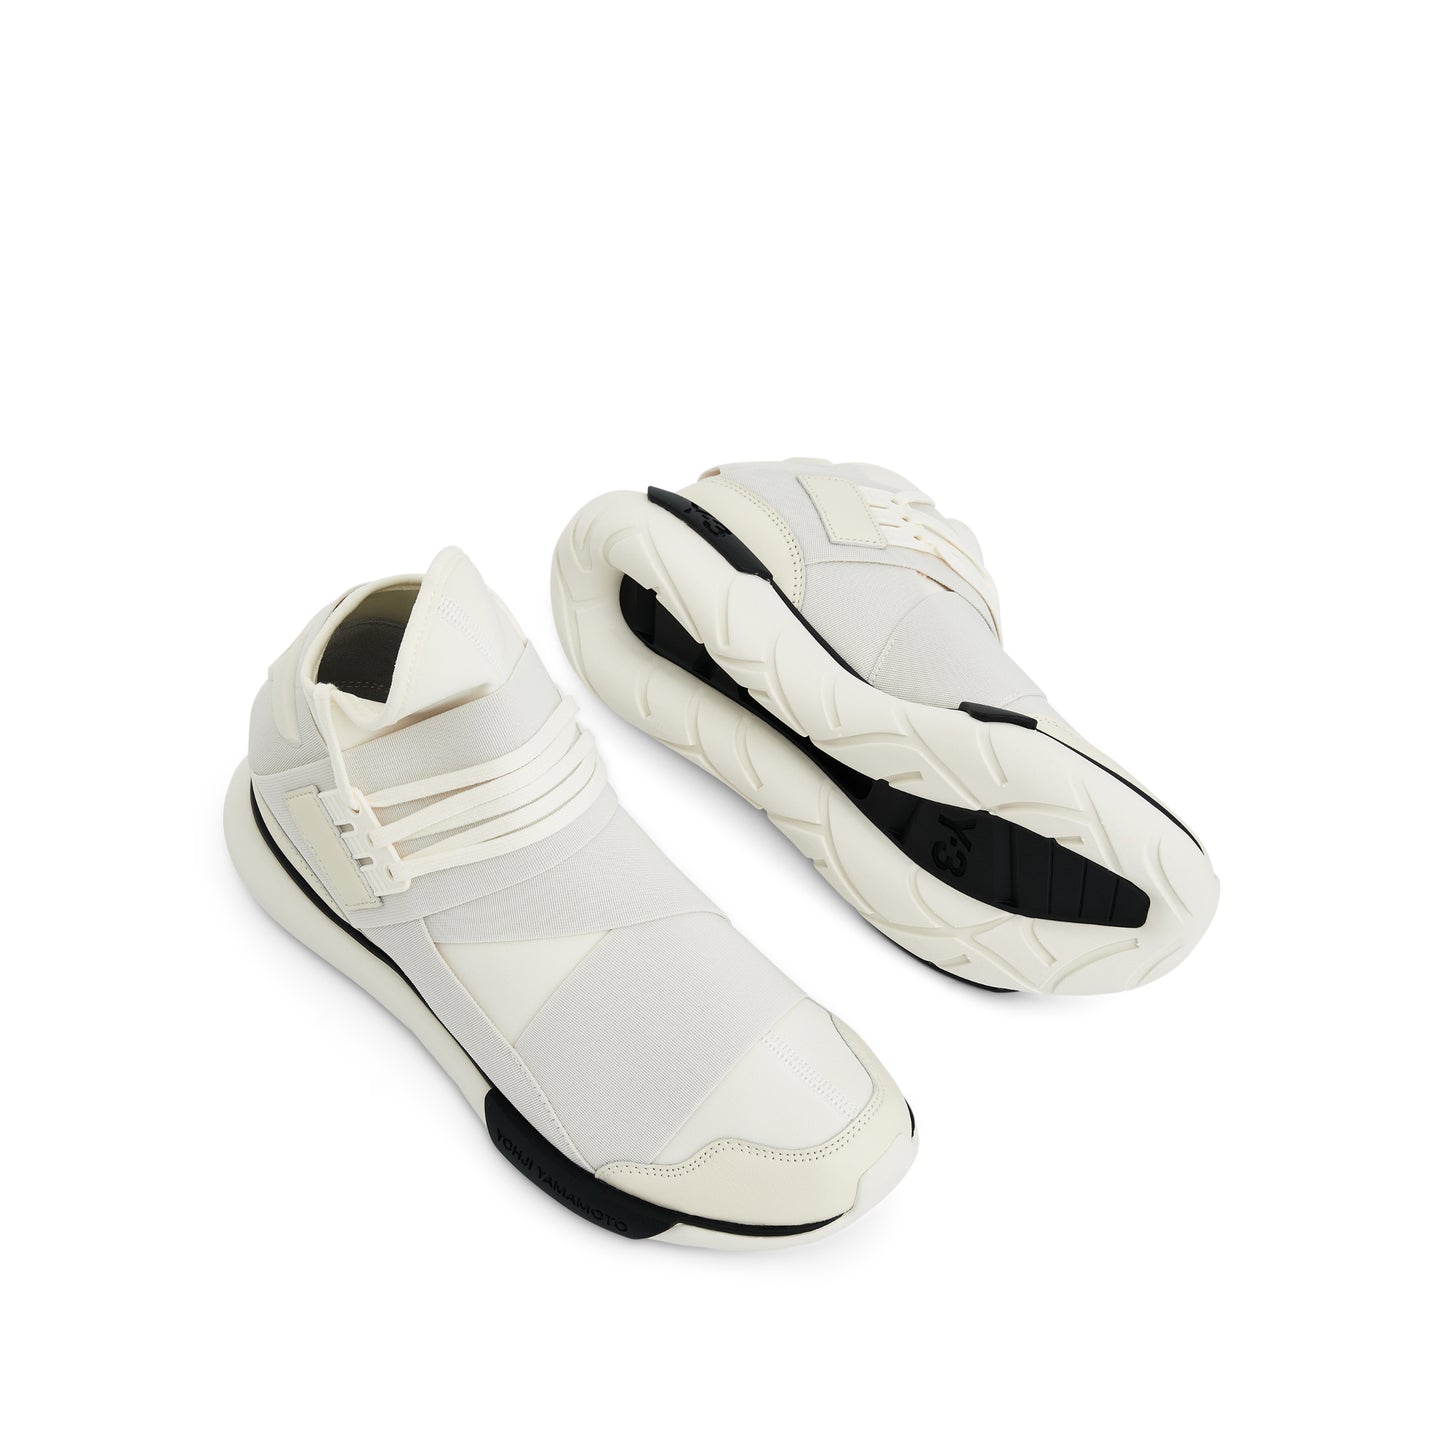 Qasa Sneaker in Cream White/Black